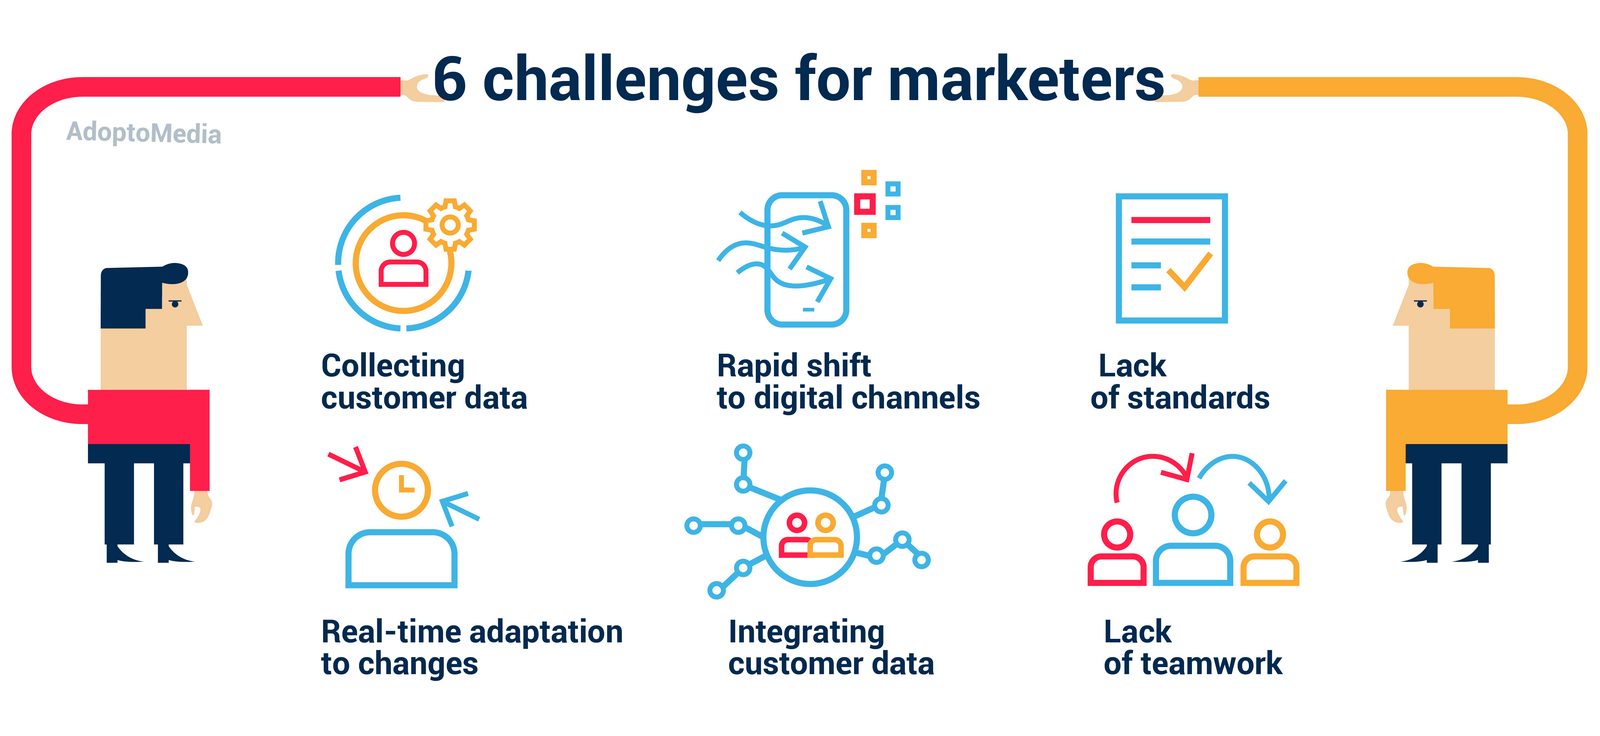 challenges for marketers, marketing technology, customer data collection, customer portfolio, marketing effectiveness measurement, interdepartmental collaboration 